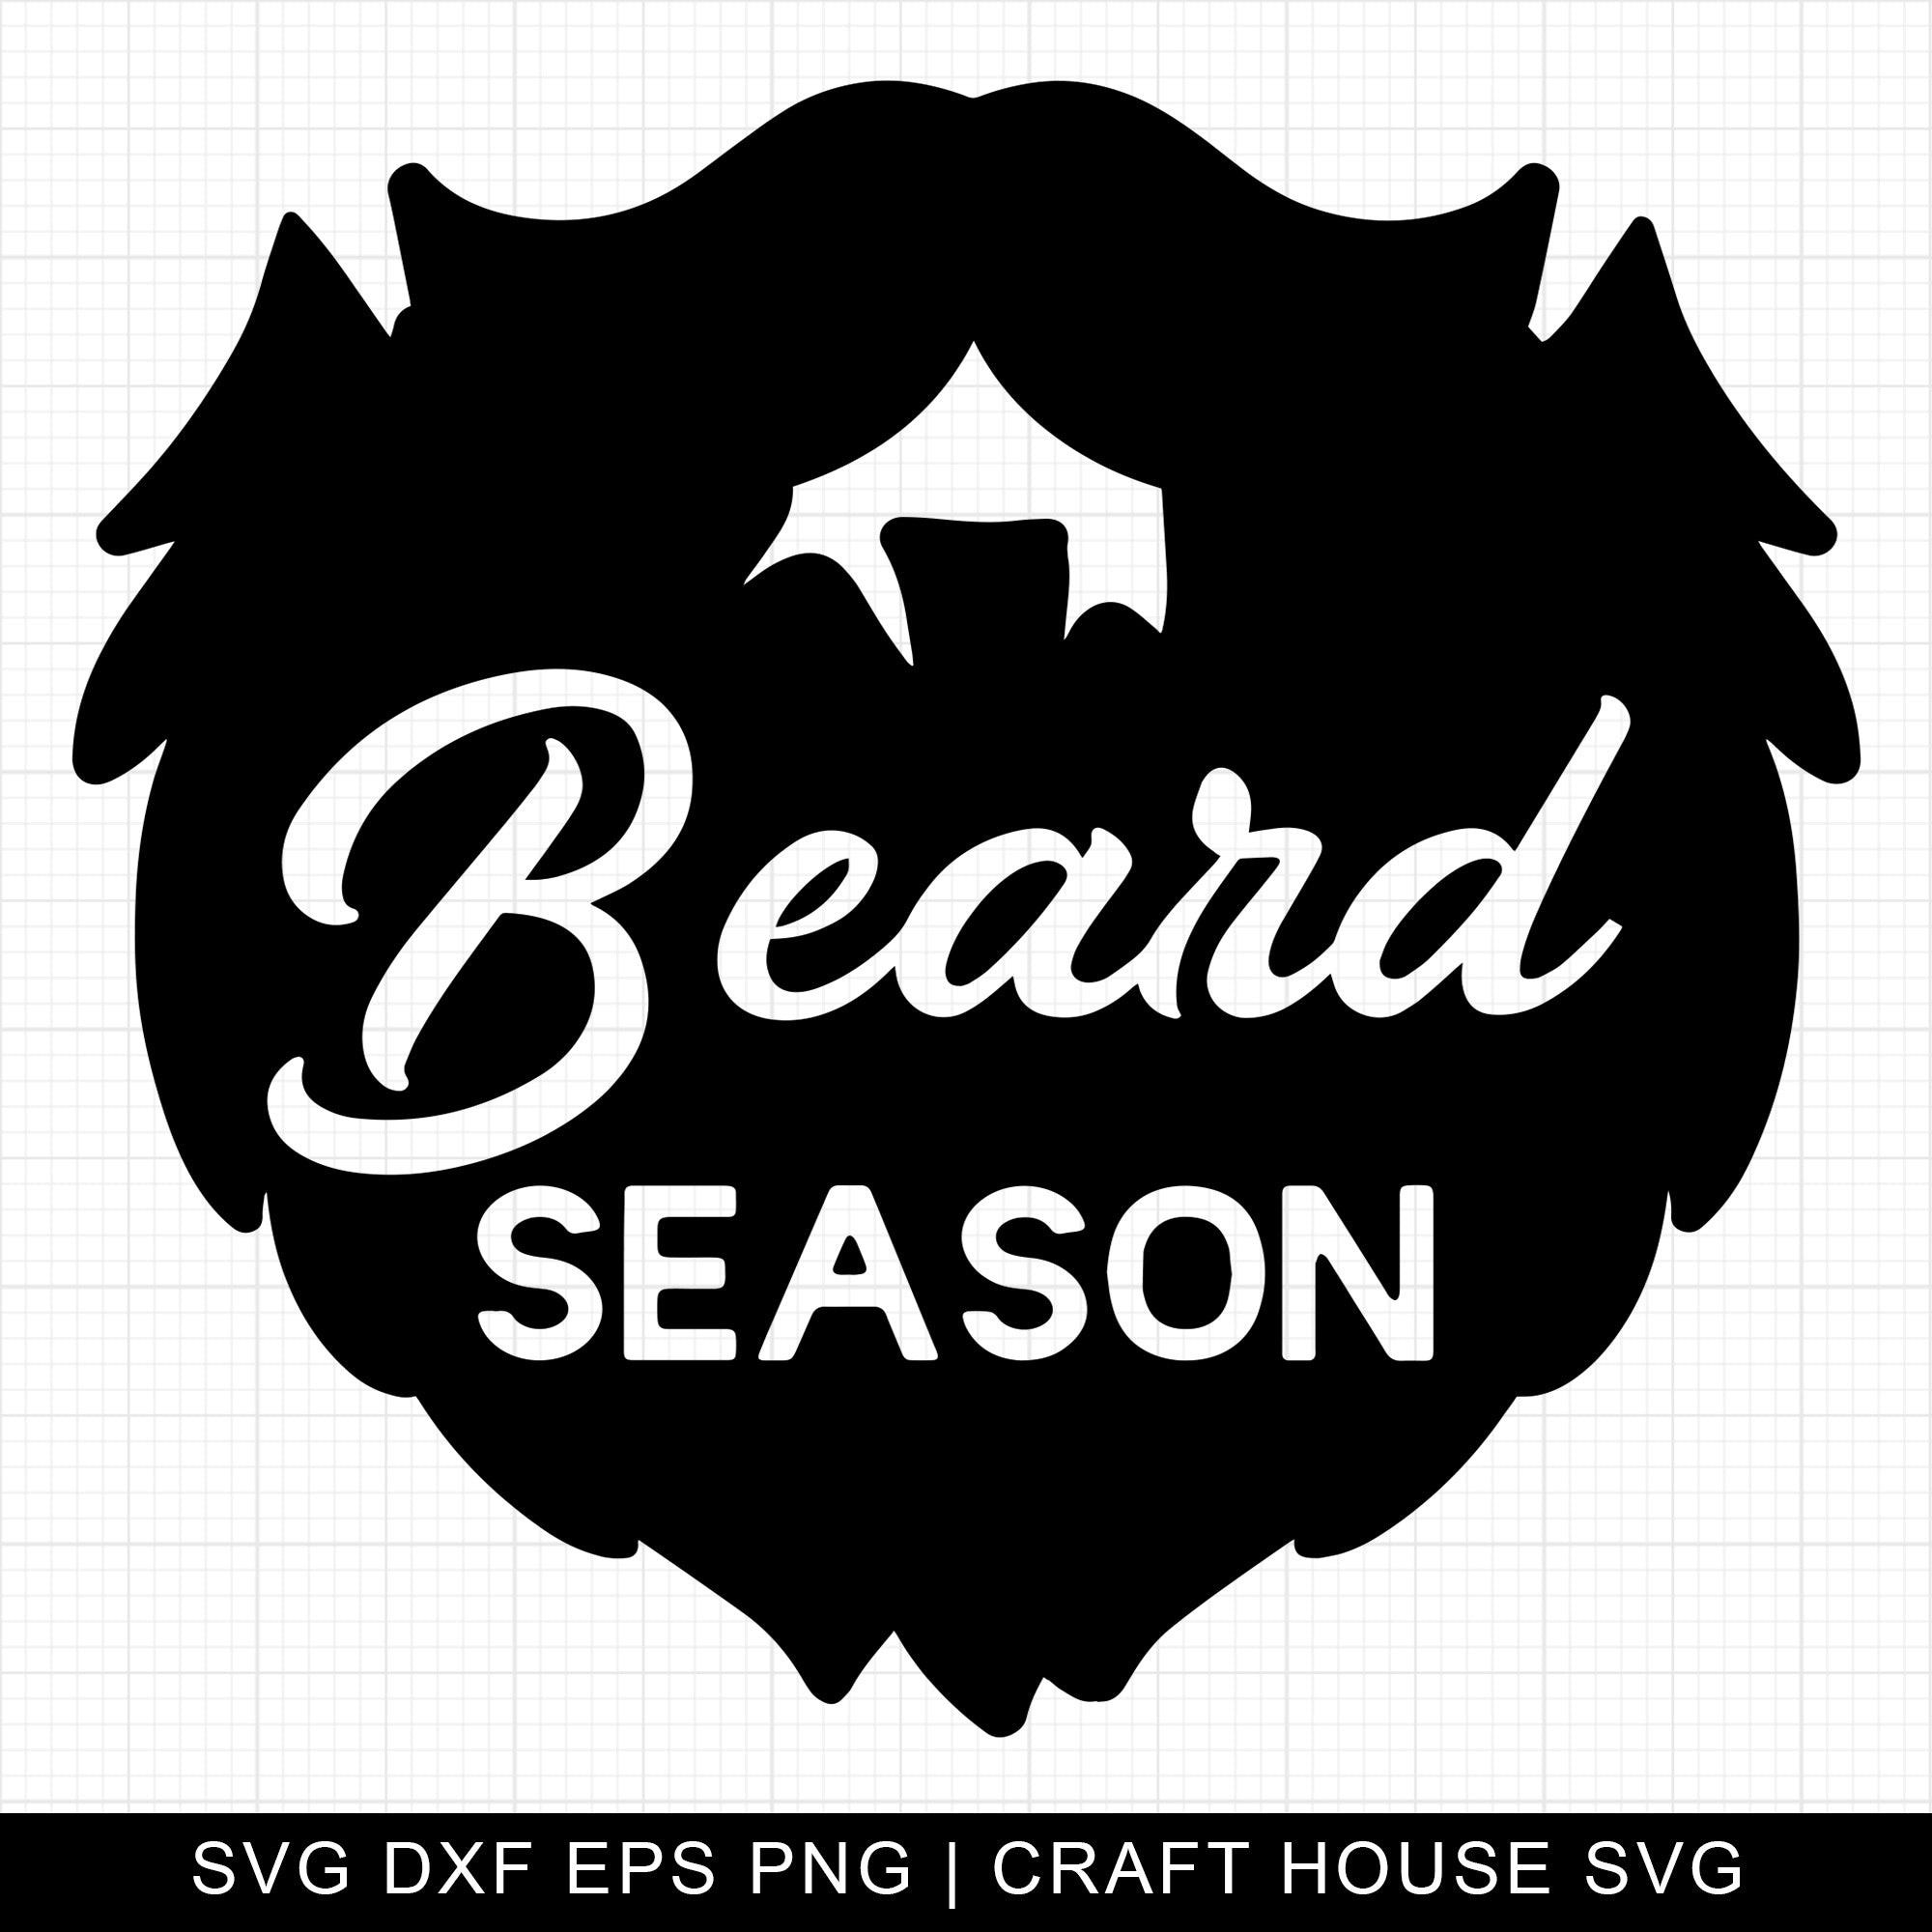 Beard season SVG | M4F1